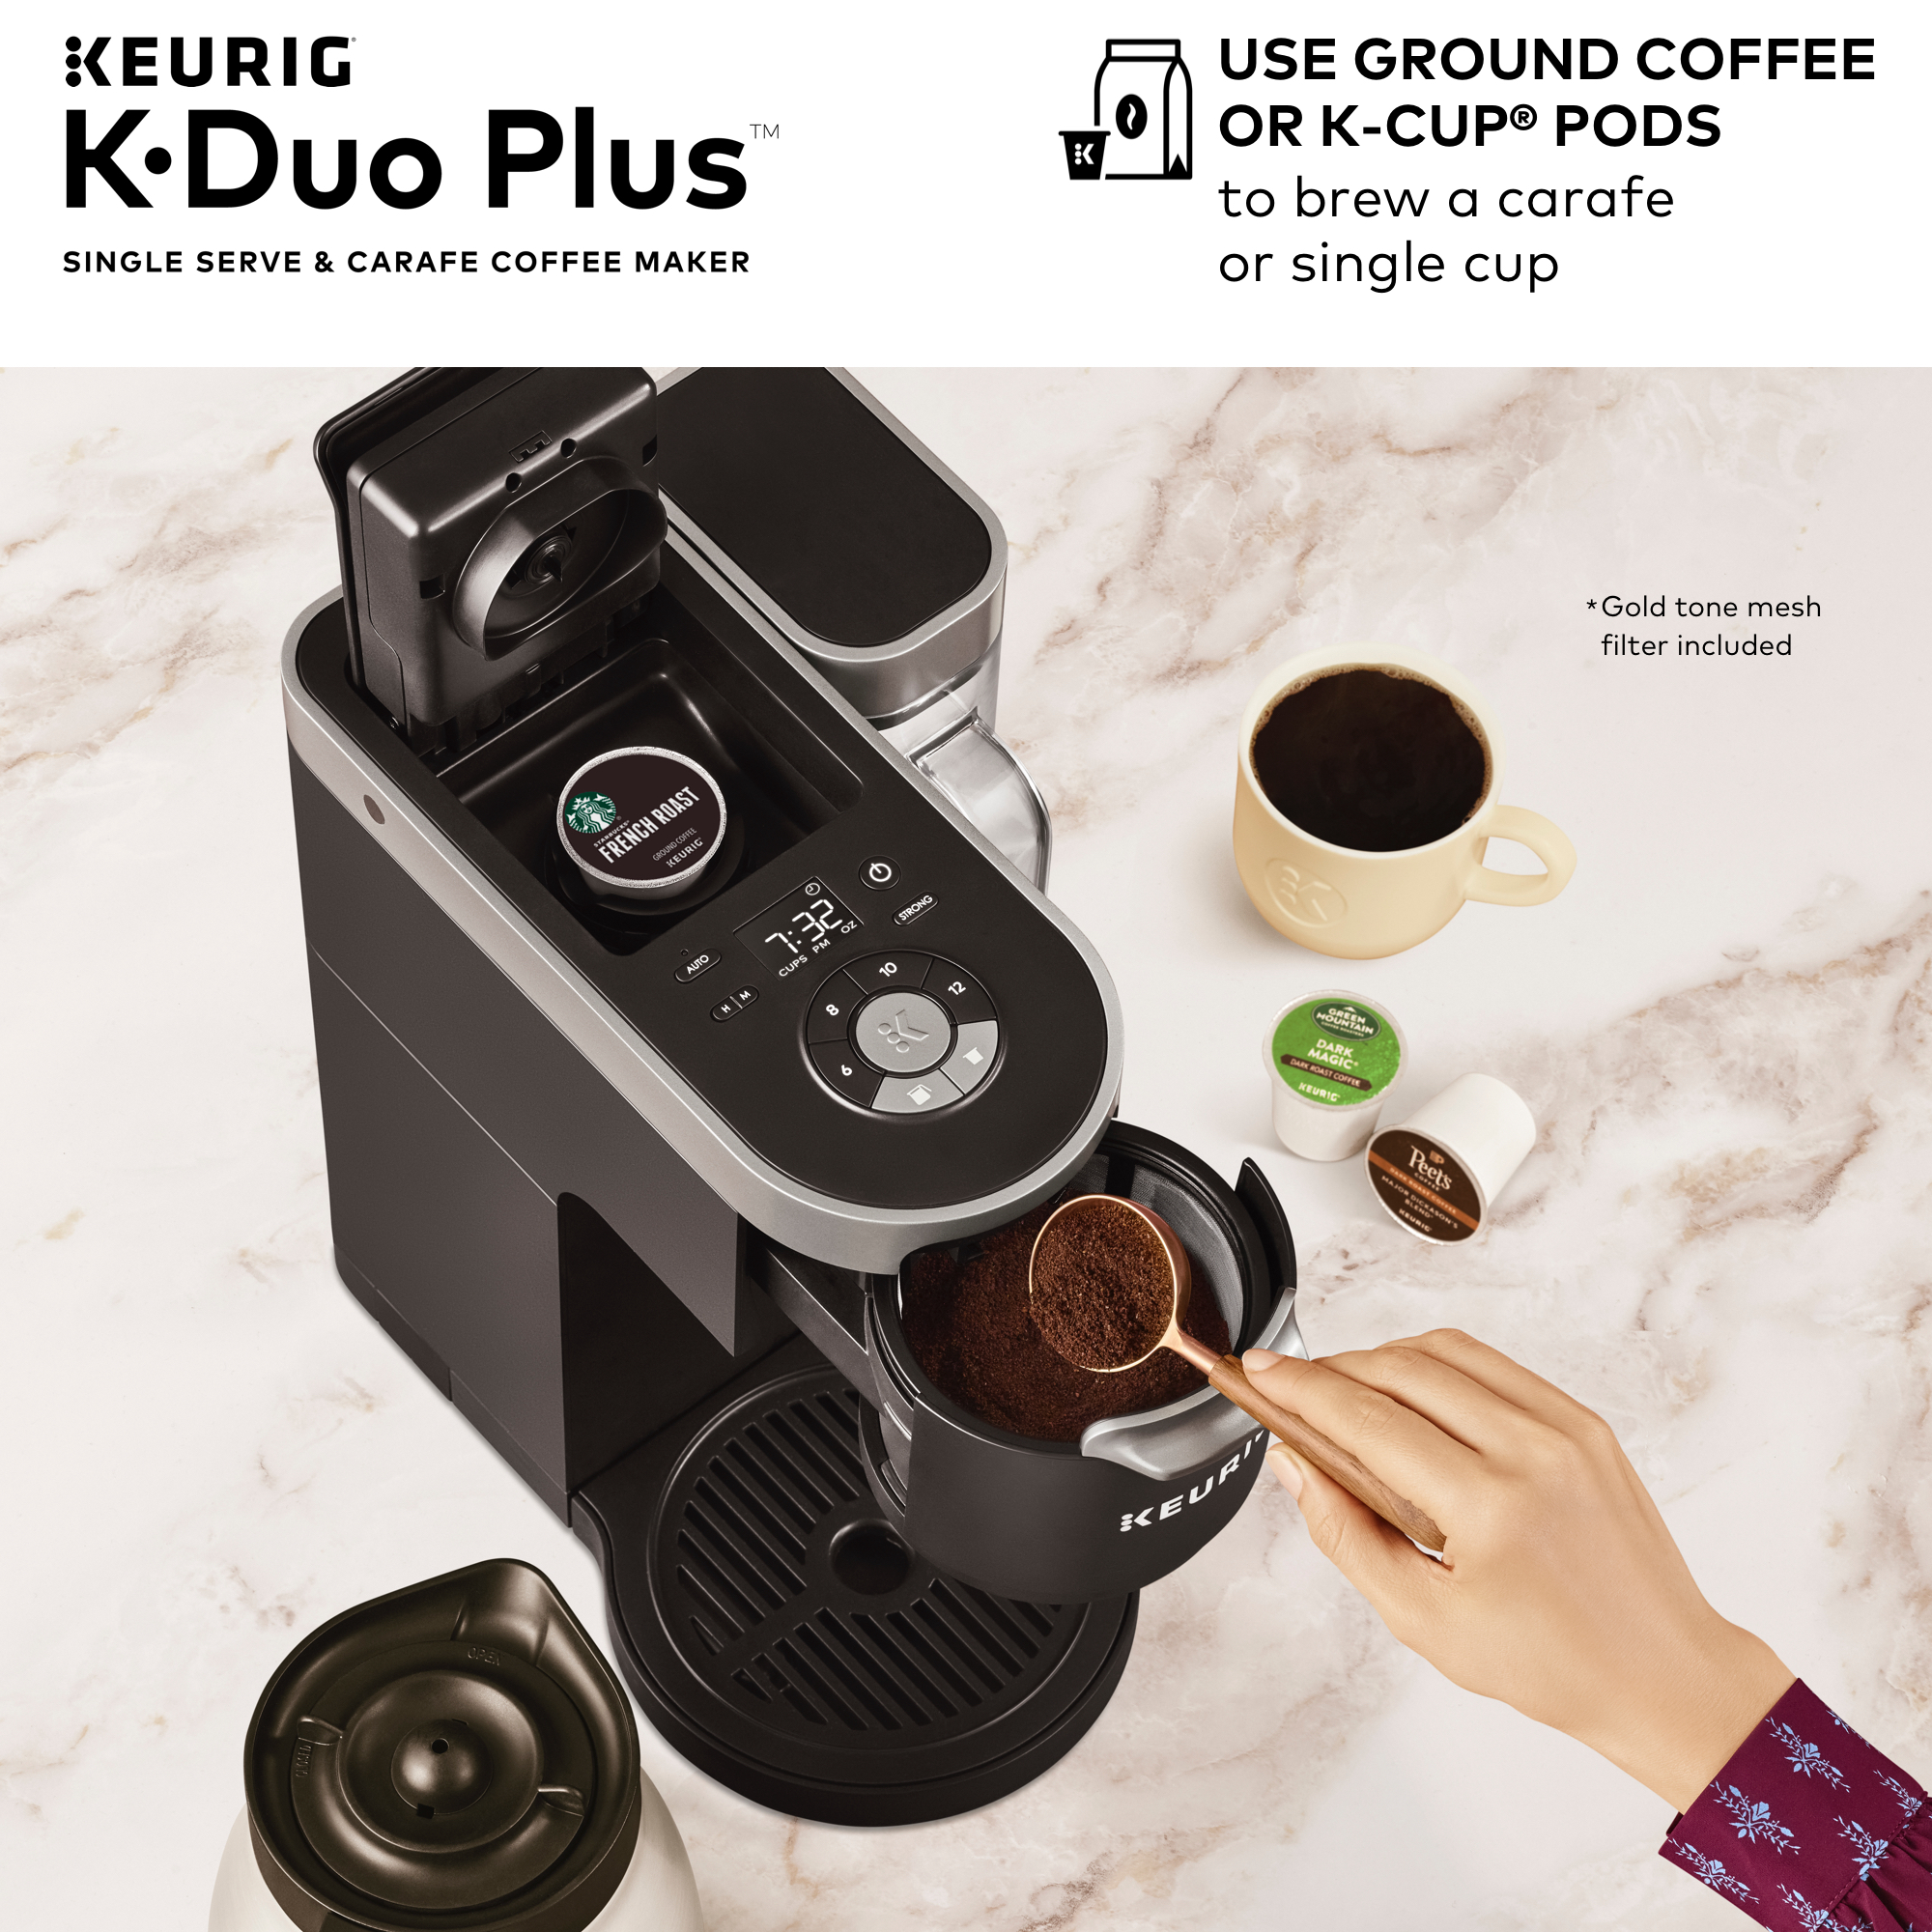 Keurig K-Duo Plus Single Serve & Carafe Coffee Maker - image 13 of 25